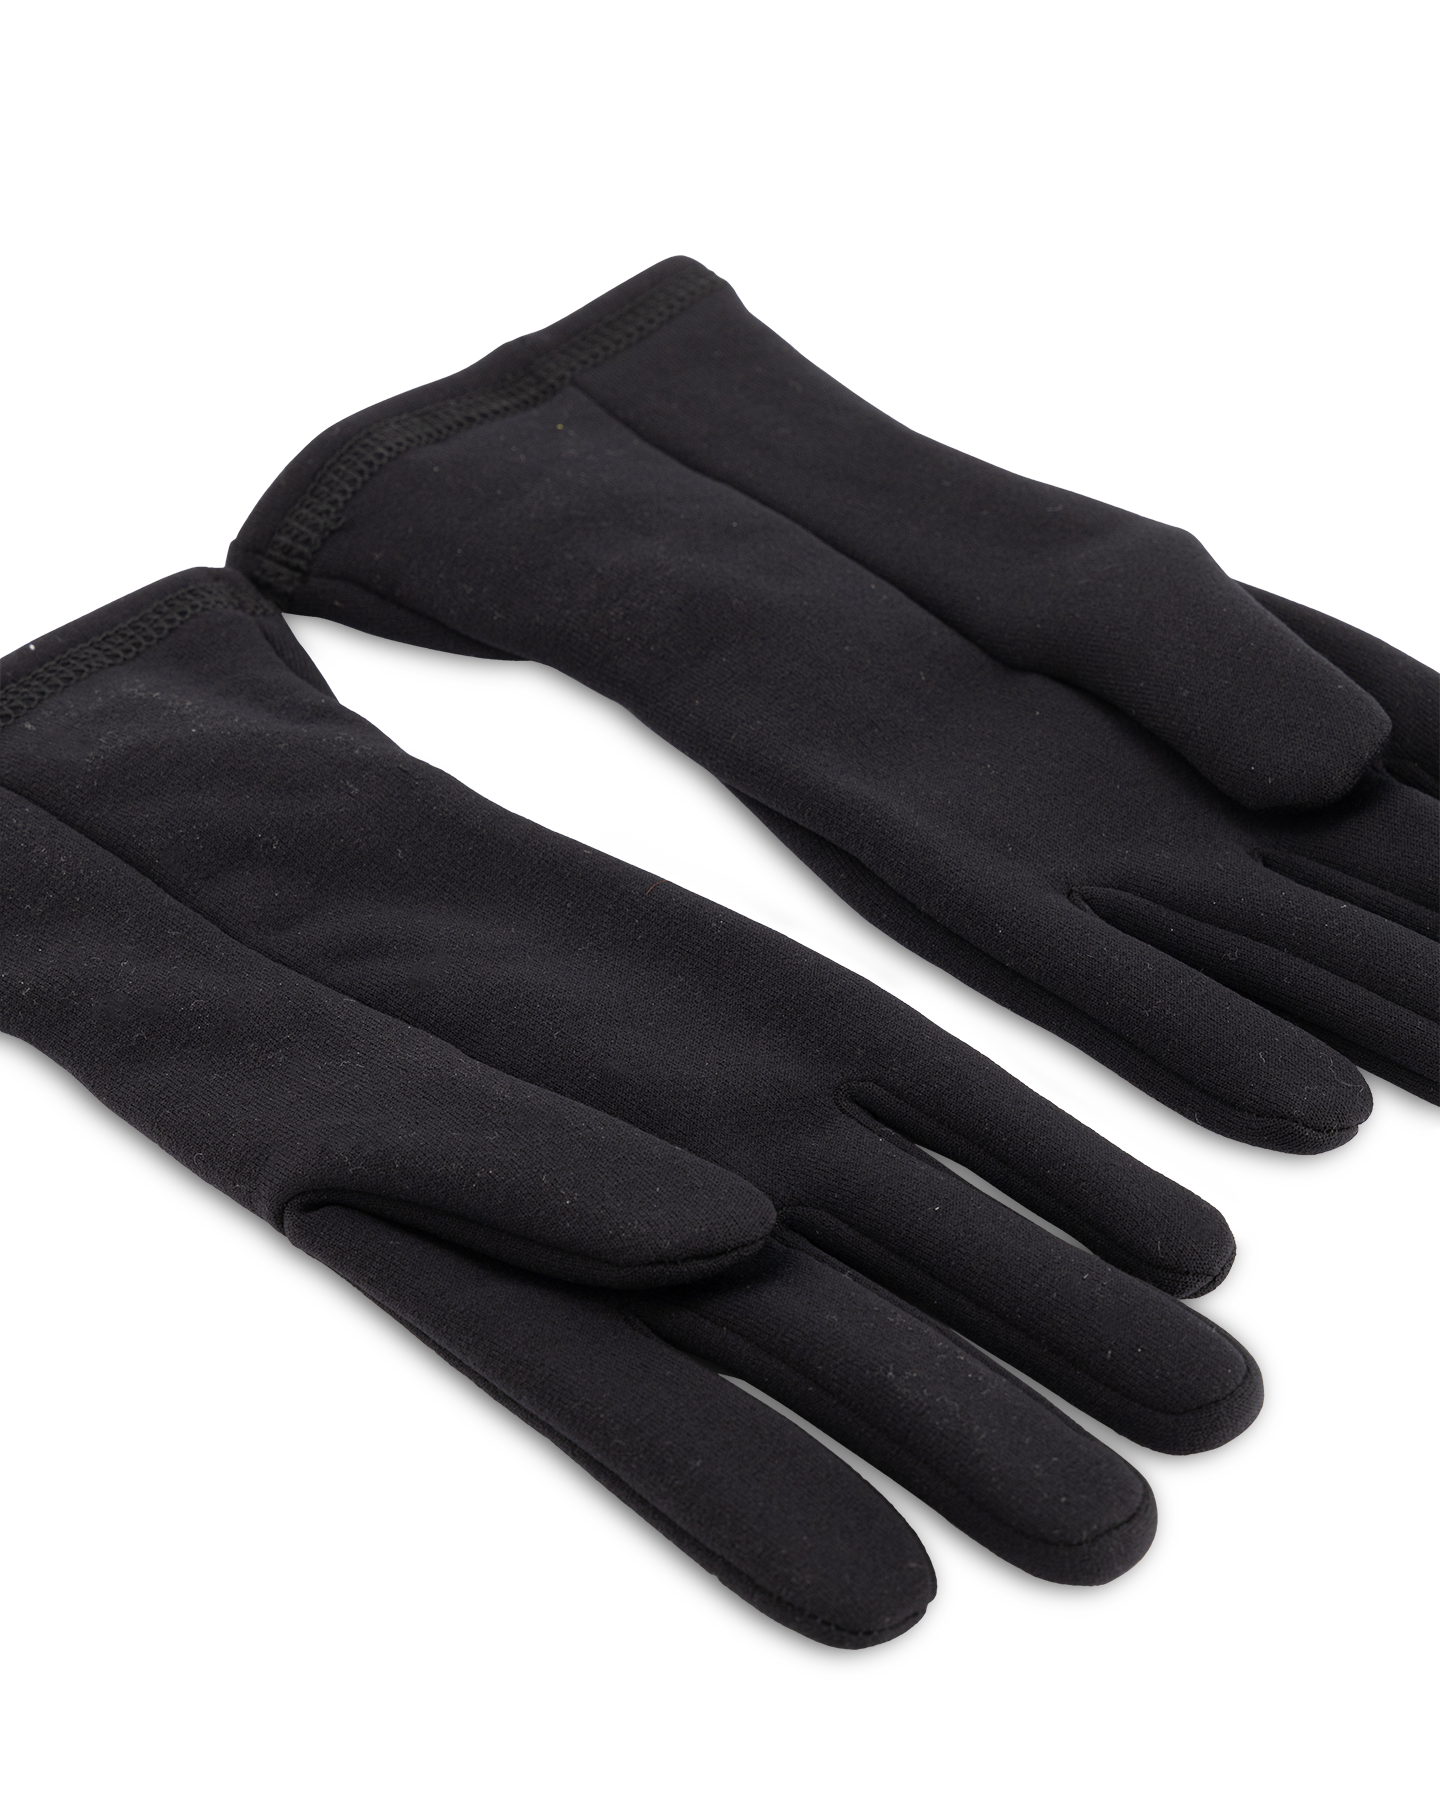 66 North Vik Gloves BLACK 3